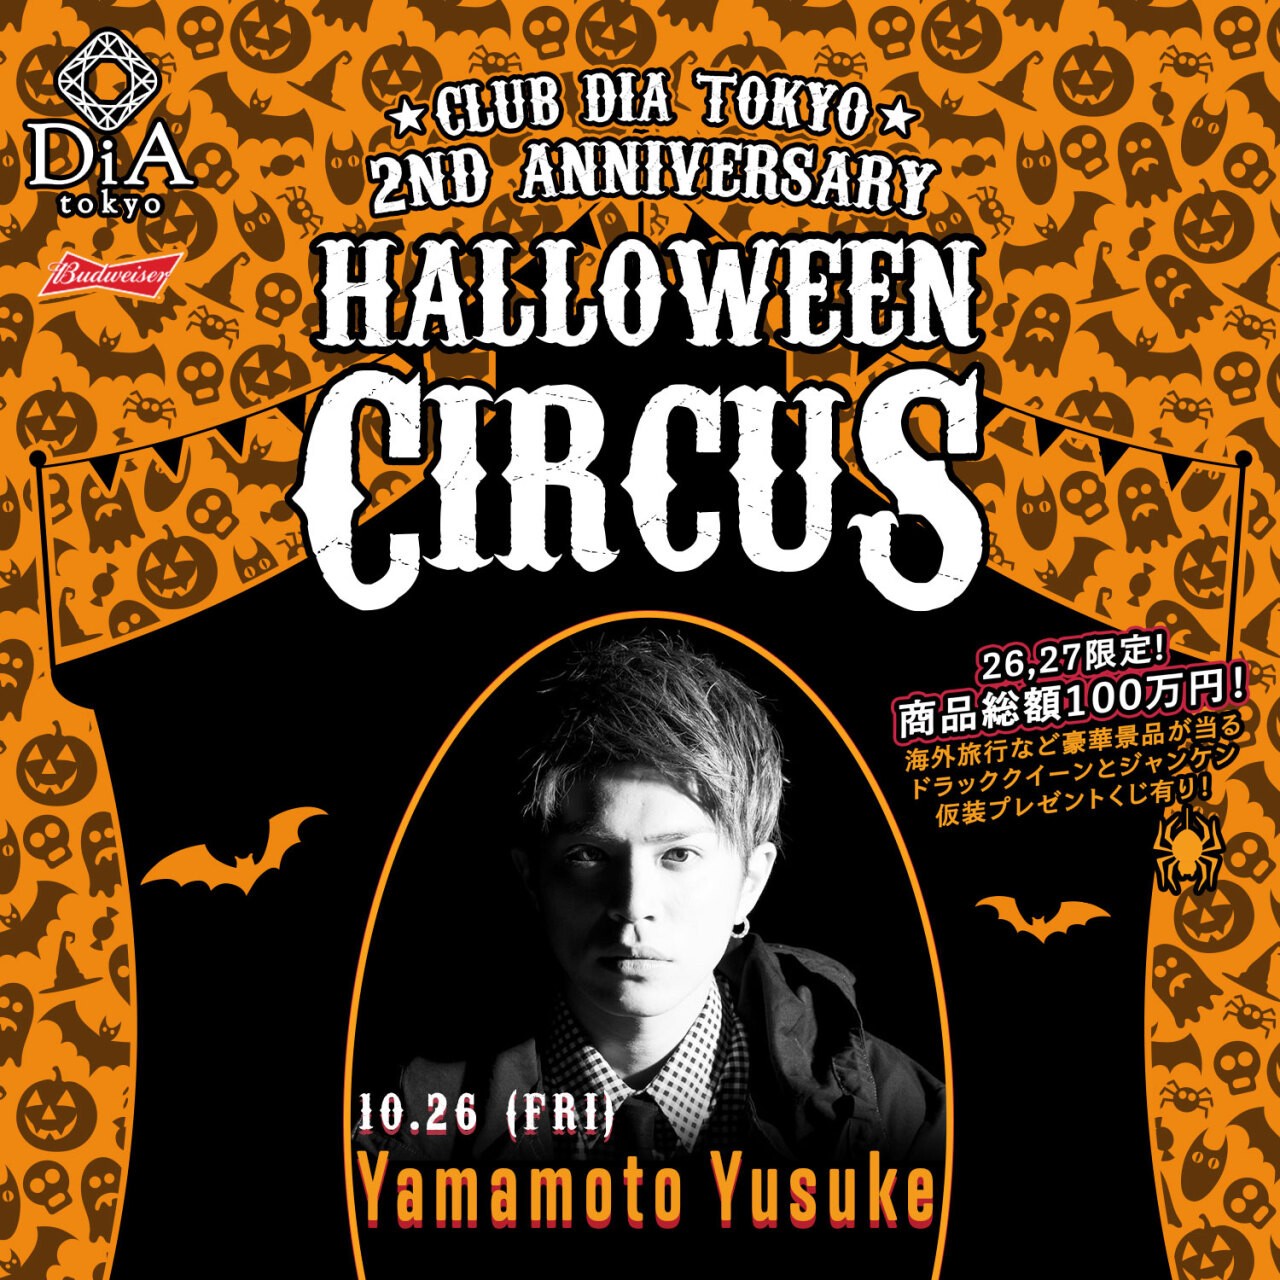 Iflyer Club Dia Tokyo 2nd Anniversary Halloween Circus Day3 Special Guest Dj Yamamoto Yusuke At Dia Tokyo Tokyo Voice